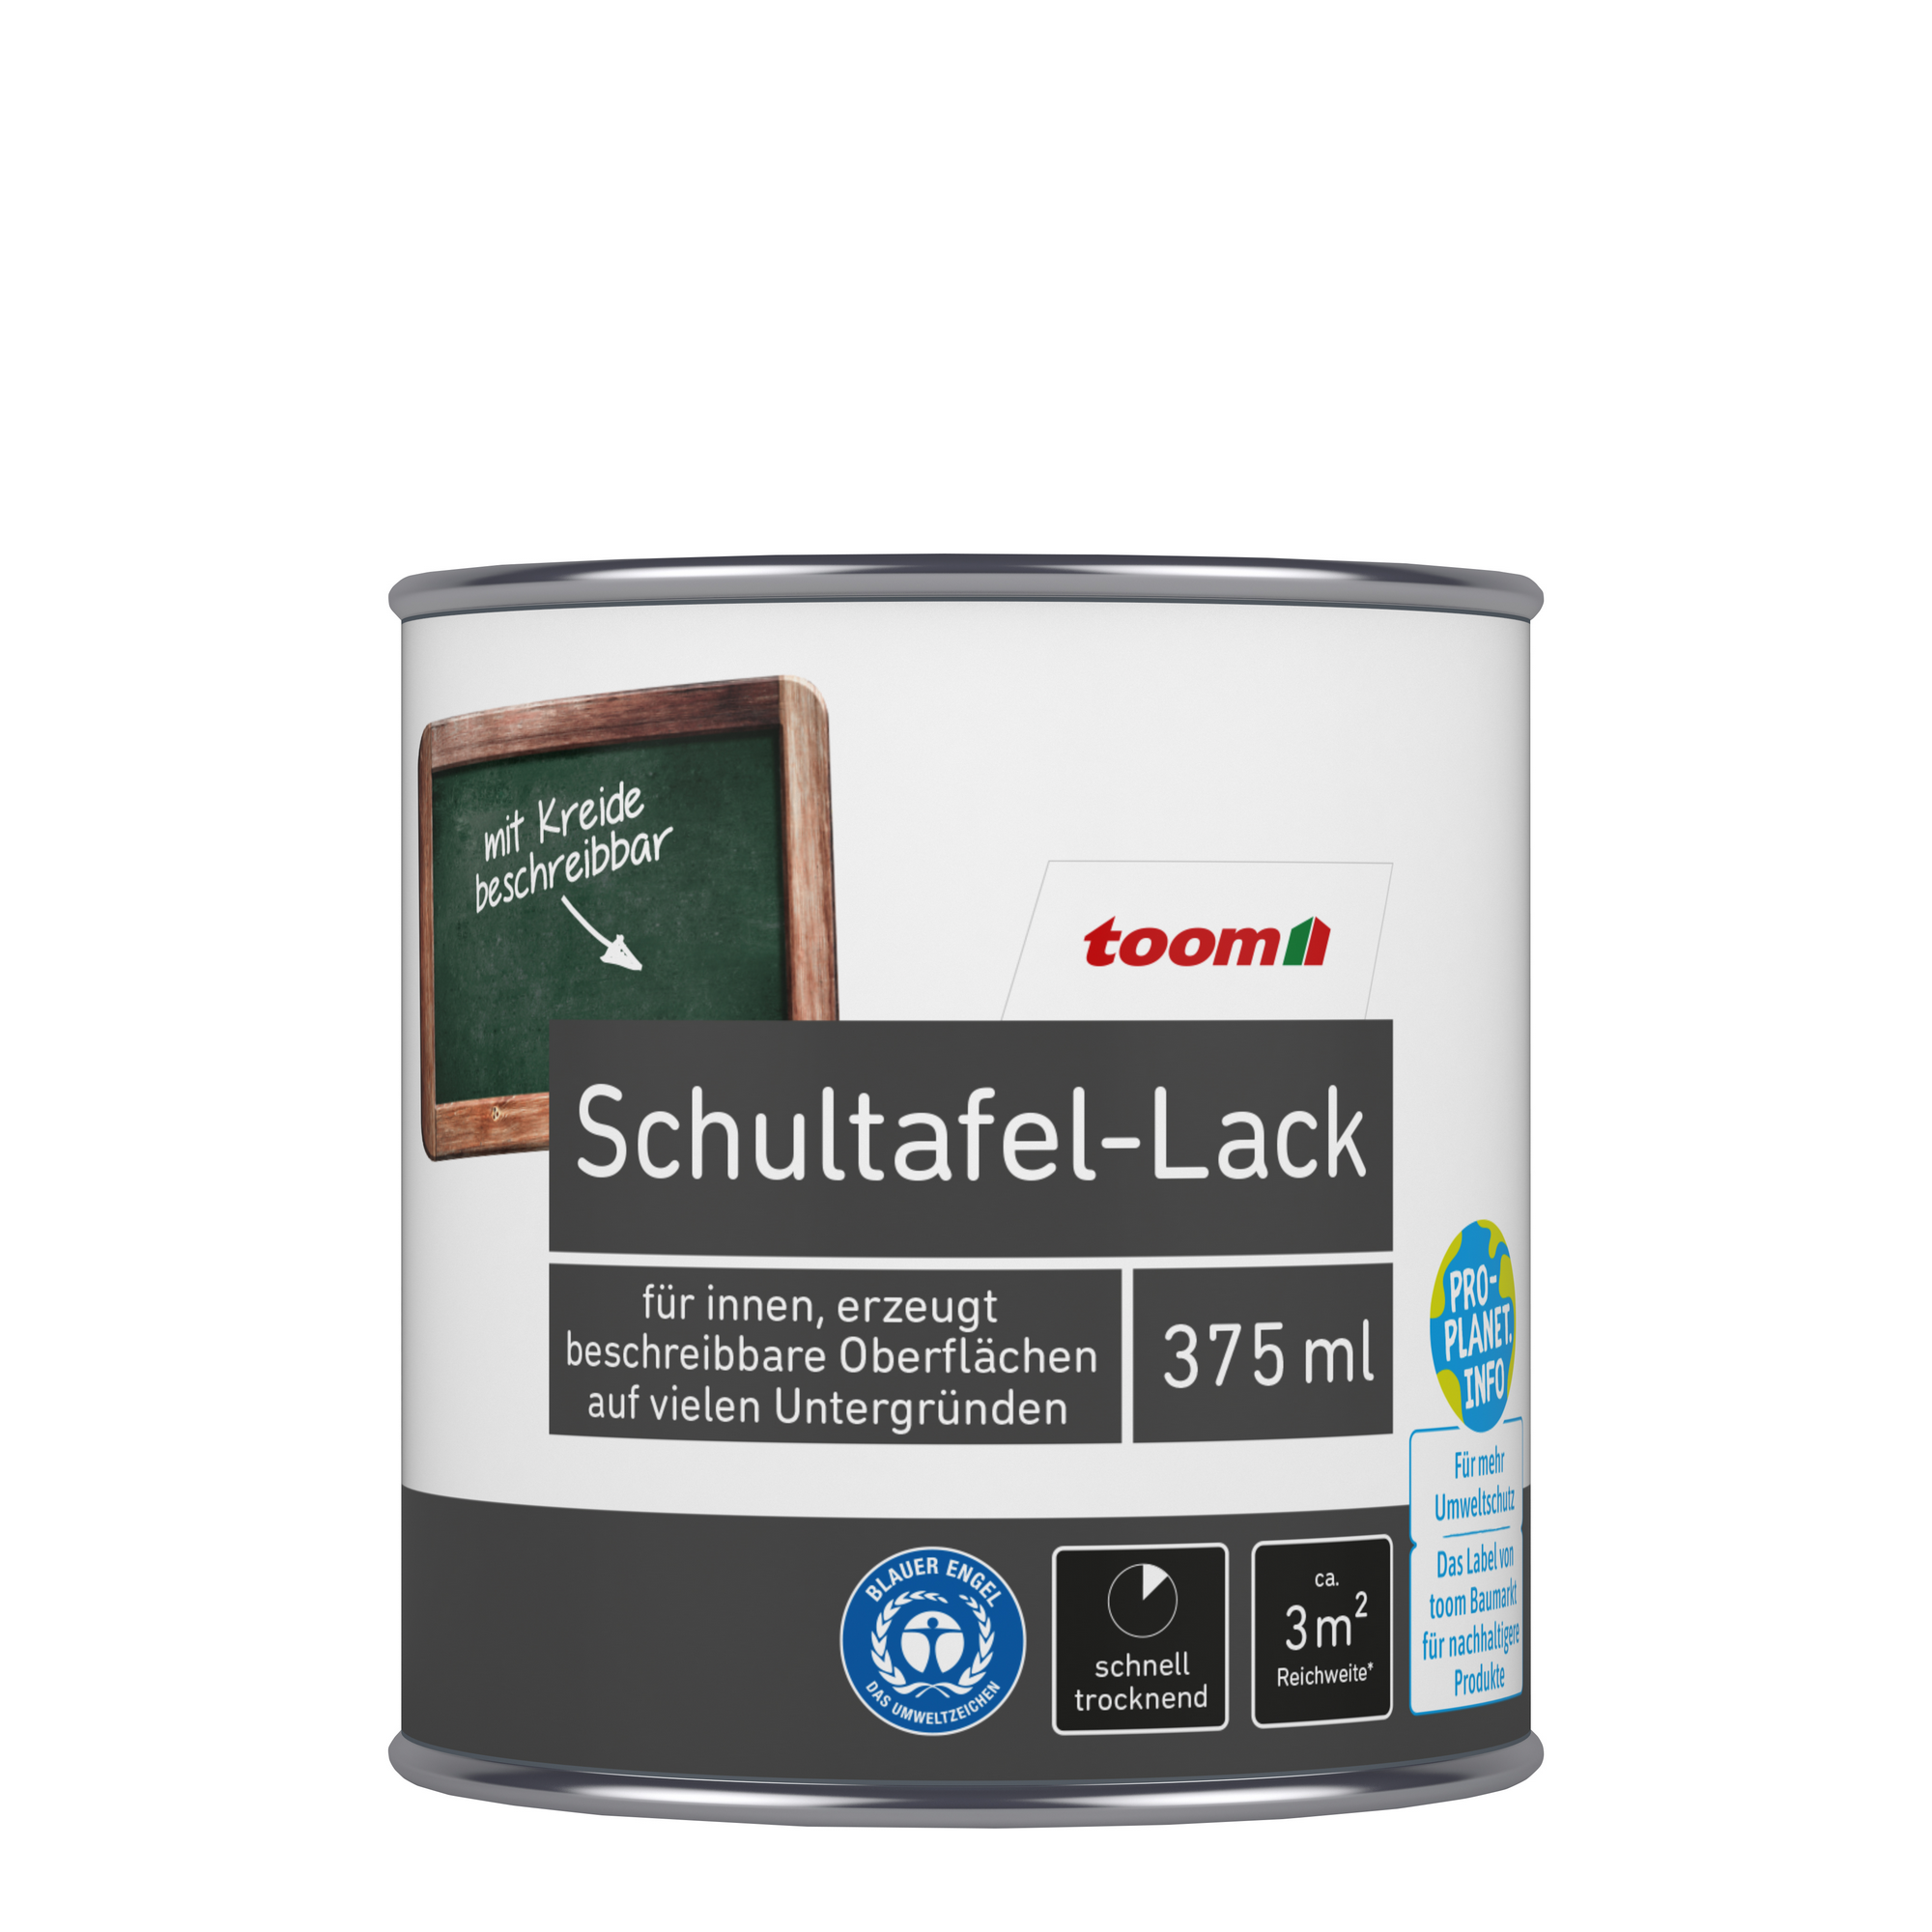 Schultafel-Lack schwarz matt 375 ml + product picture